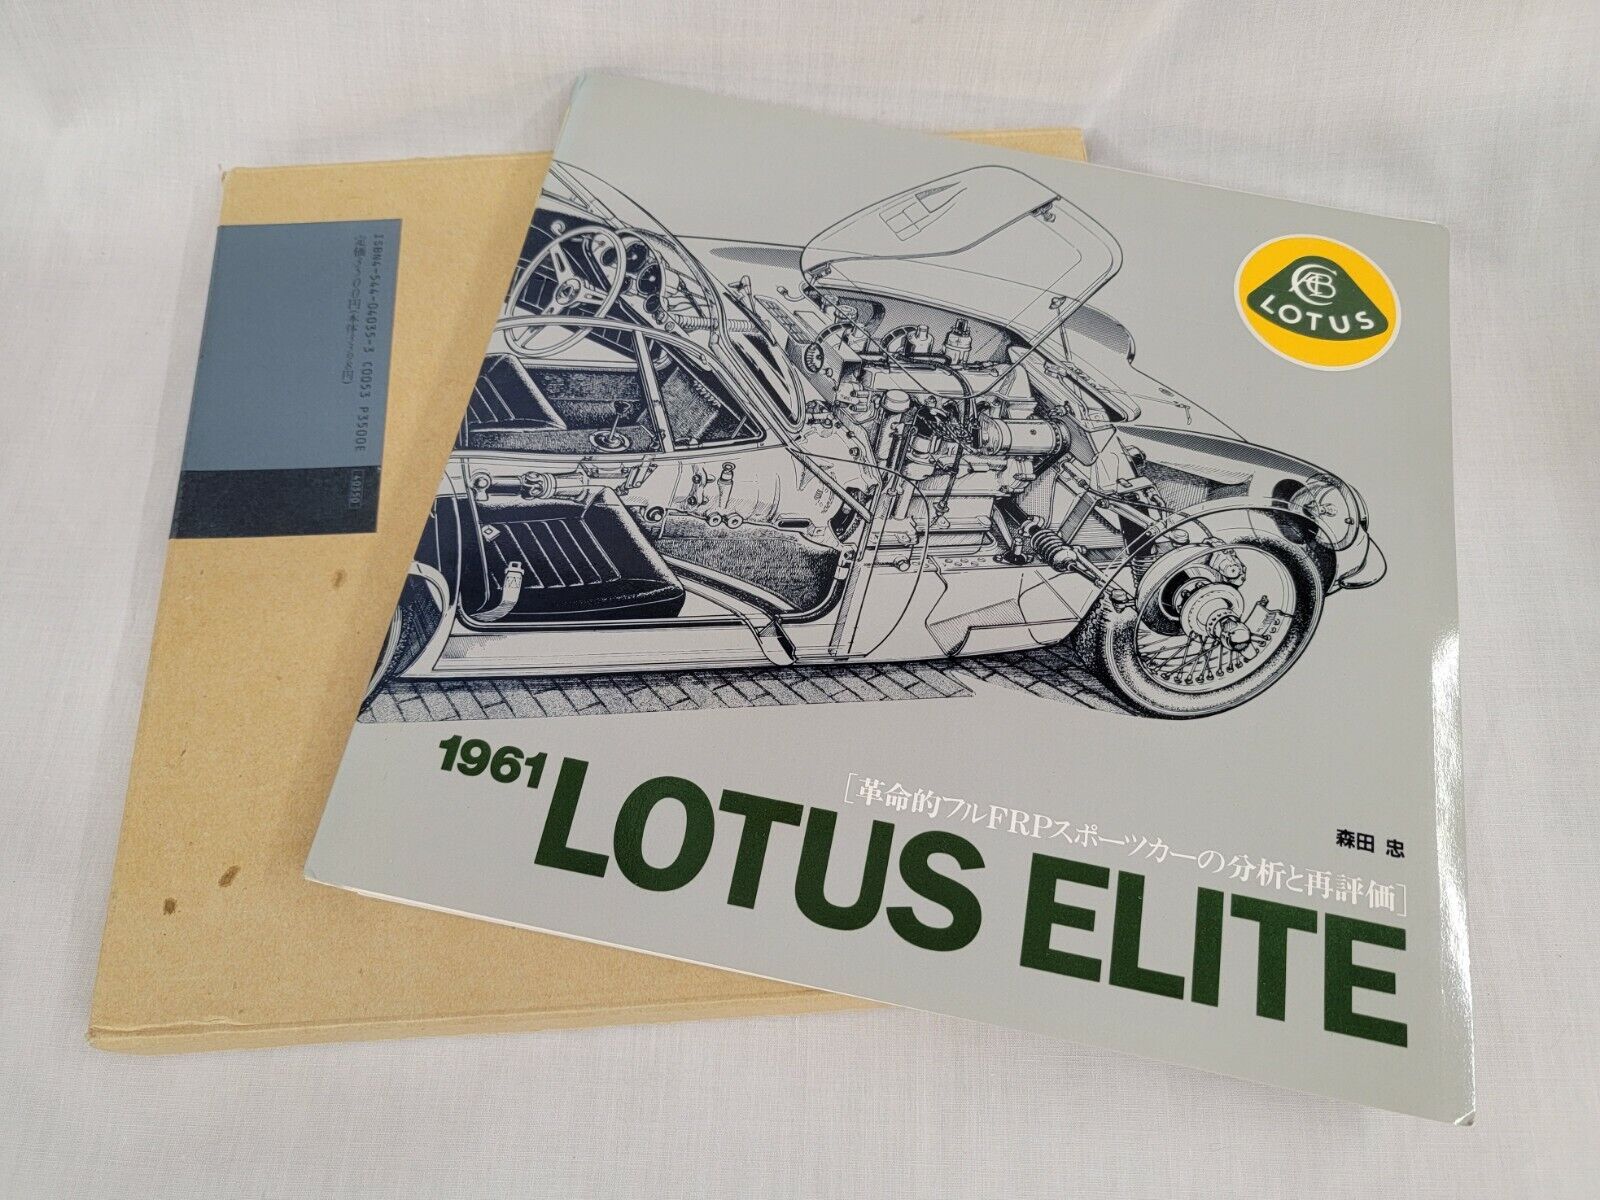 1961 LOTUS ELITE Car Graphic Book w/ Slipcase - Japan Import 1991